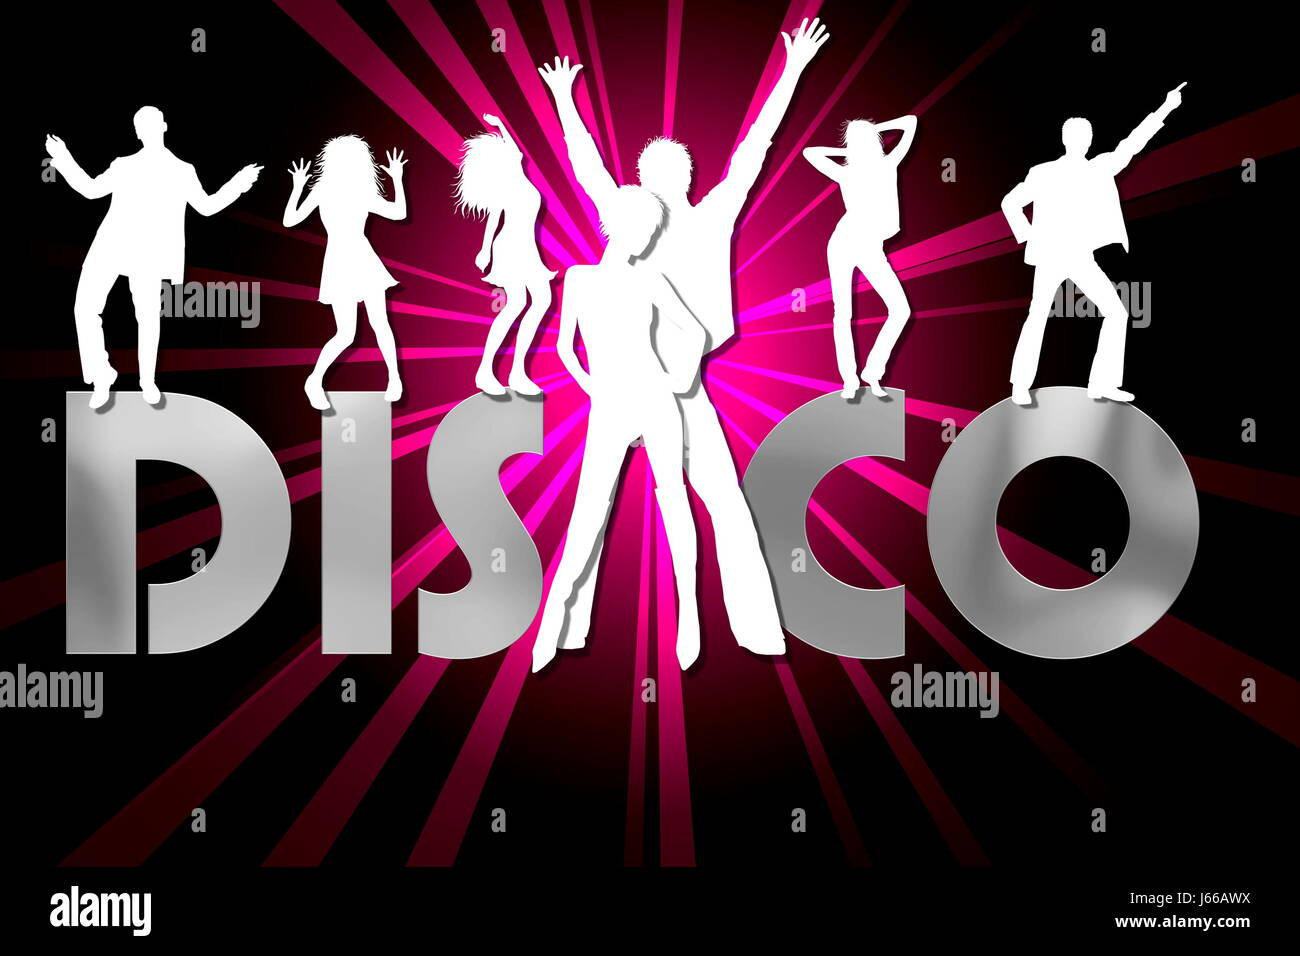 disco celebrate reveling revels celebrates party celebration discotheque disco Stock Photo